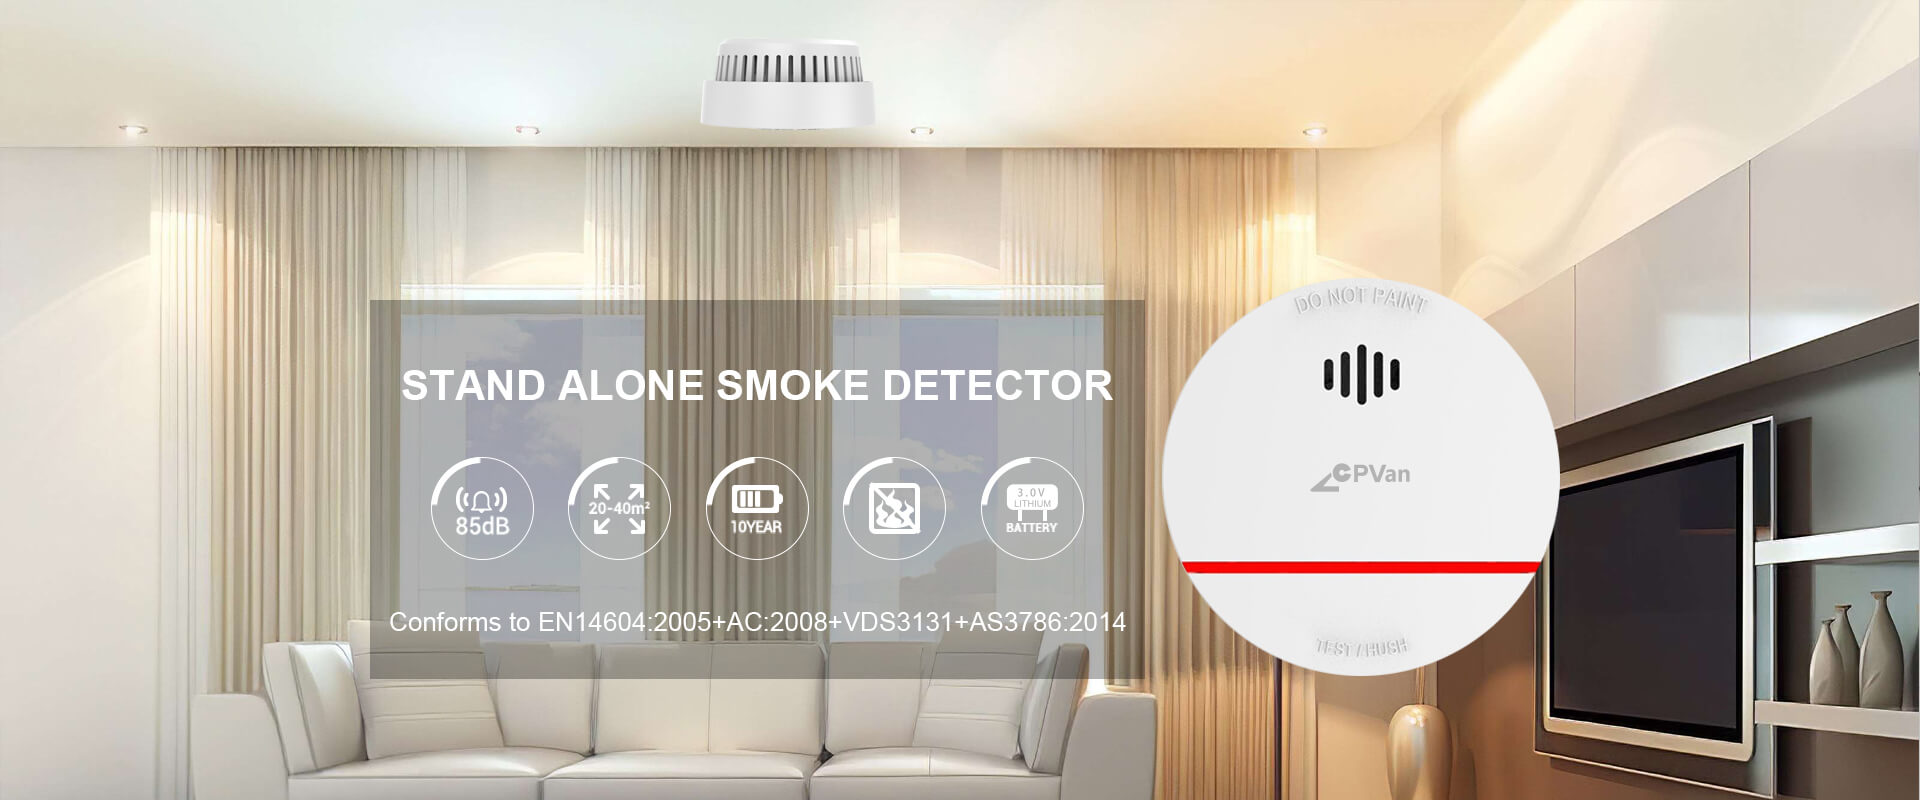 Medium Smoke Detector (M series)